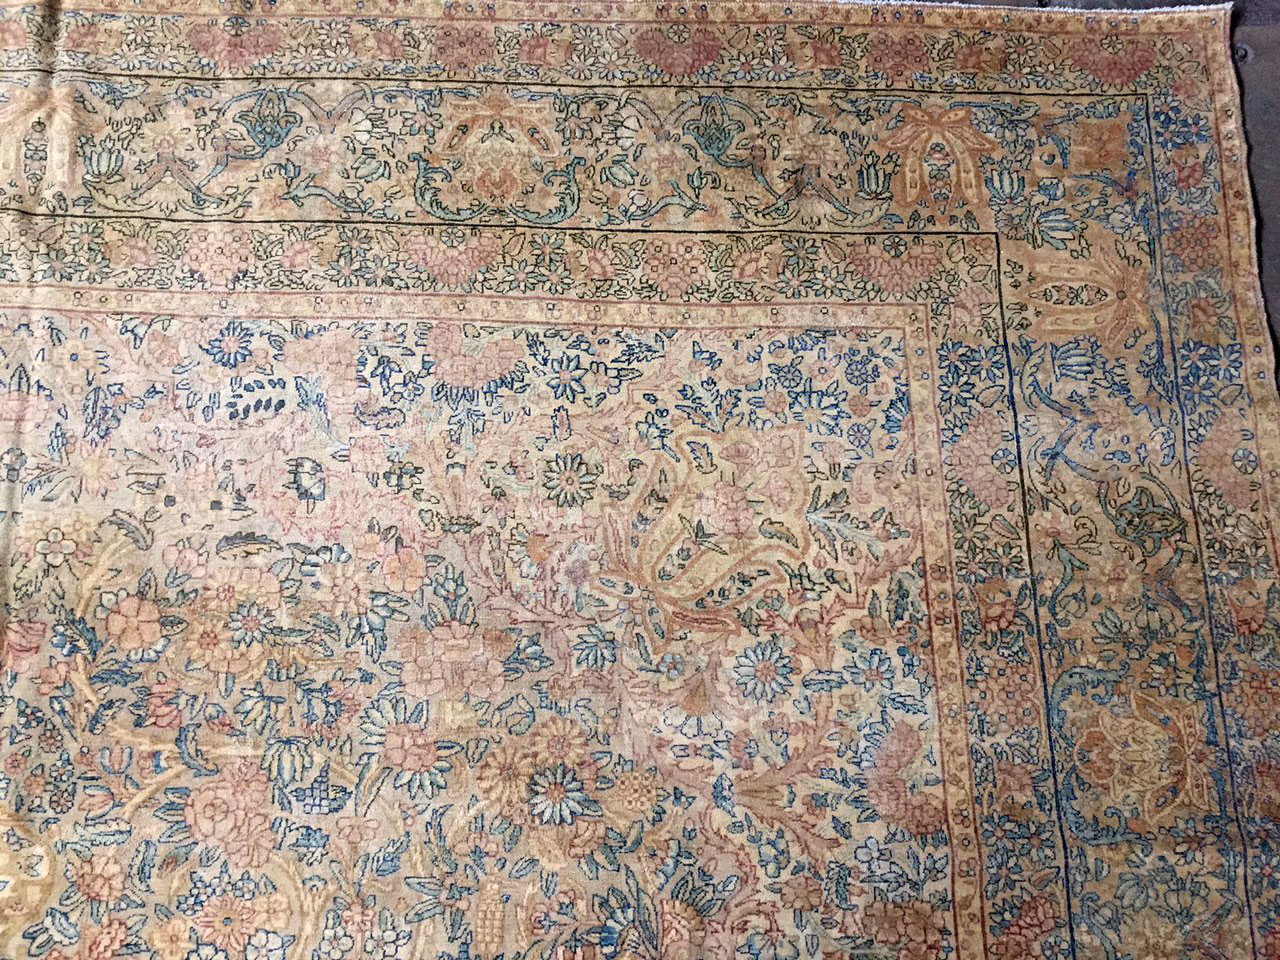 Antique kirman Carpet - # 51185